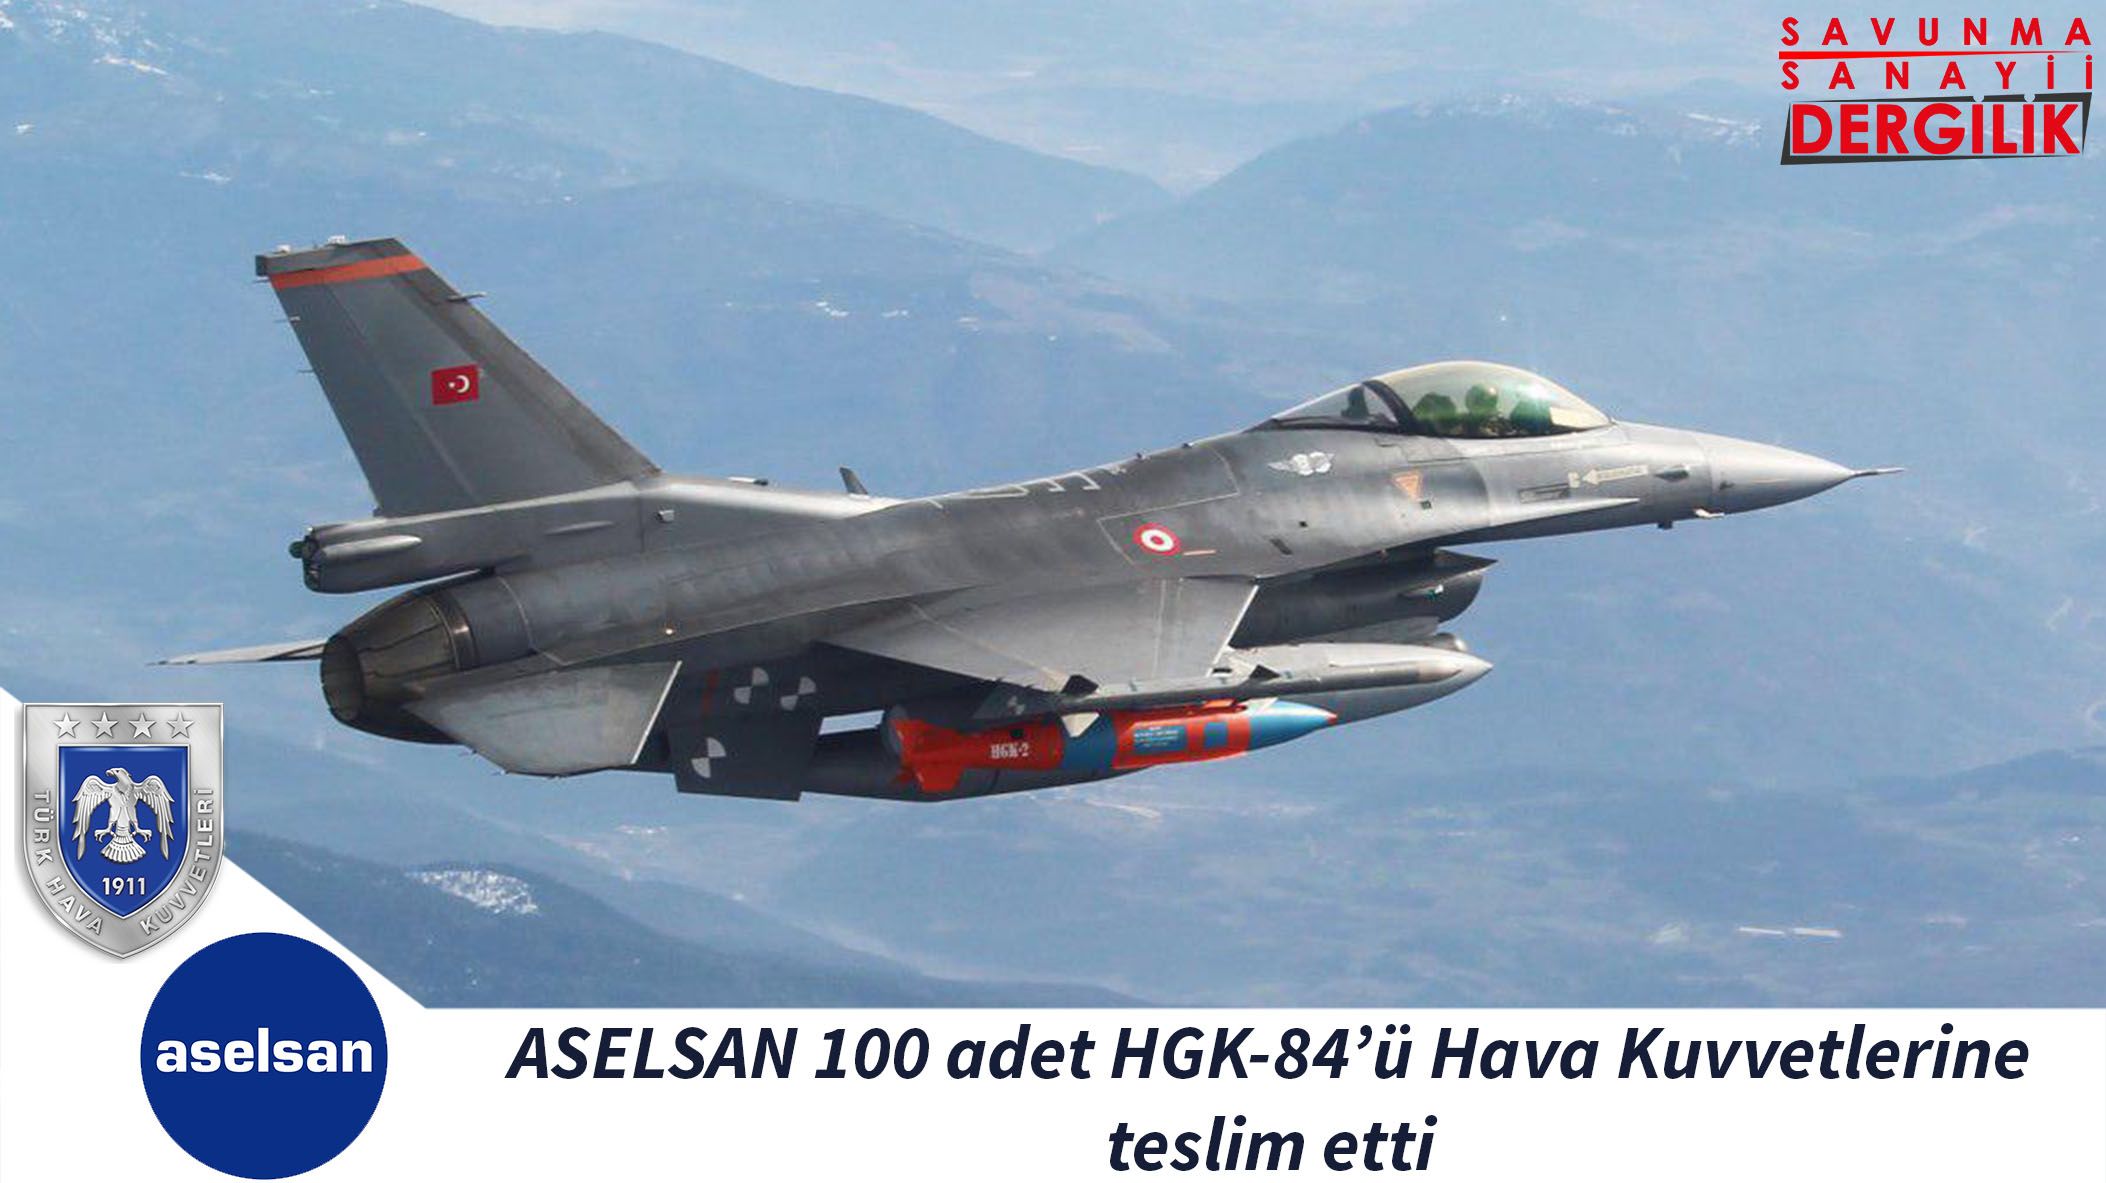 ASELSAN 100 adet HGK-84’ü Hava Kuvvetlerine teslim etti